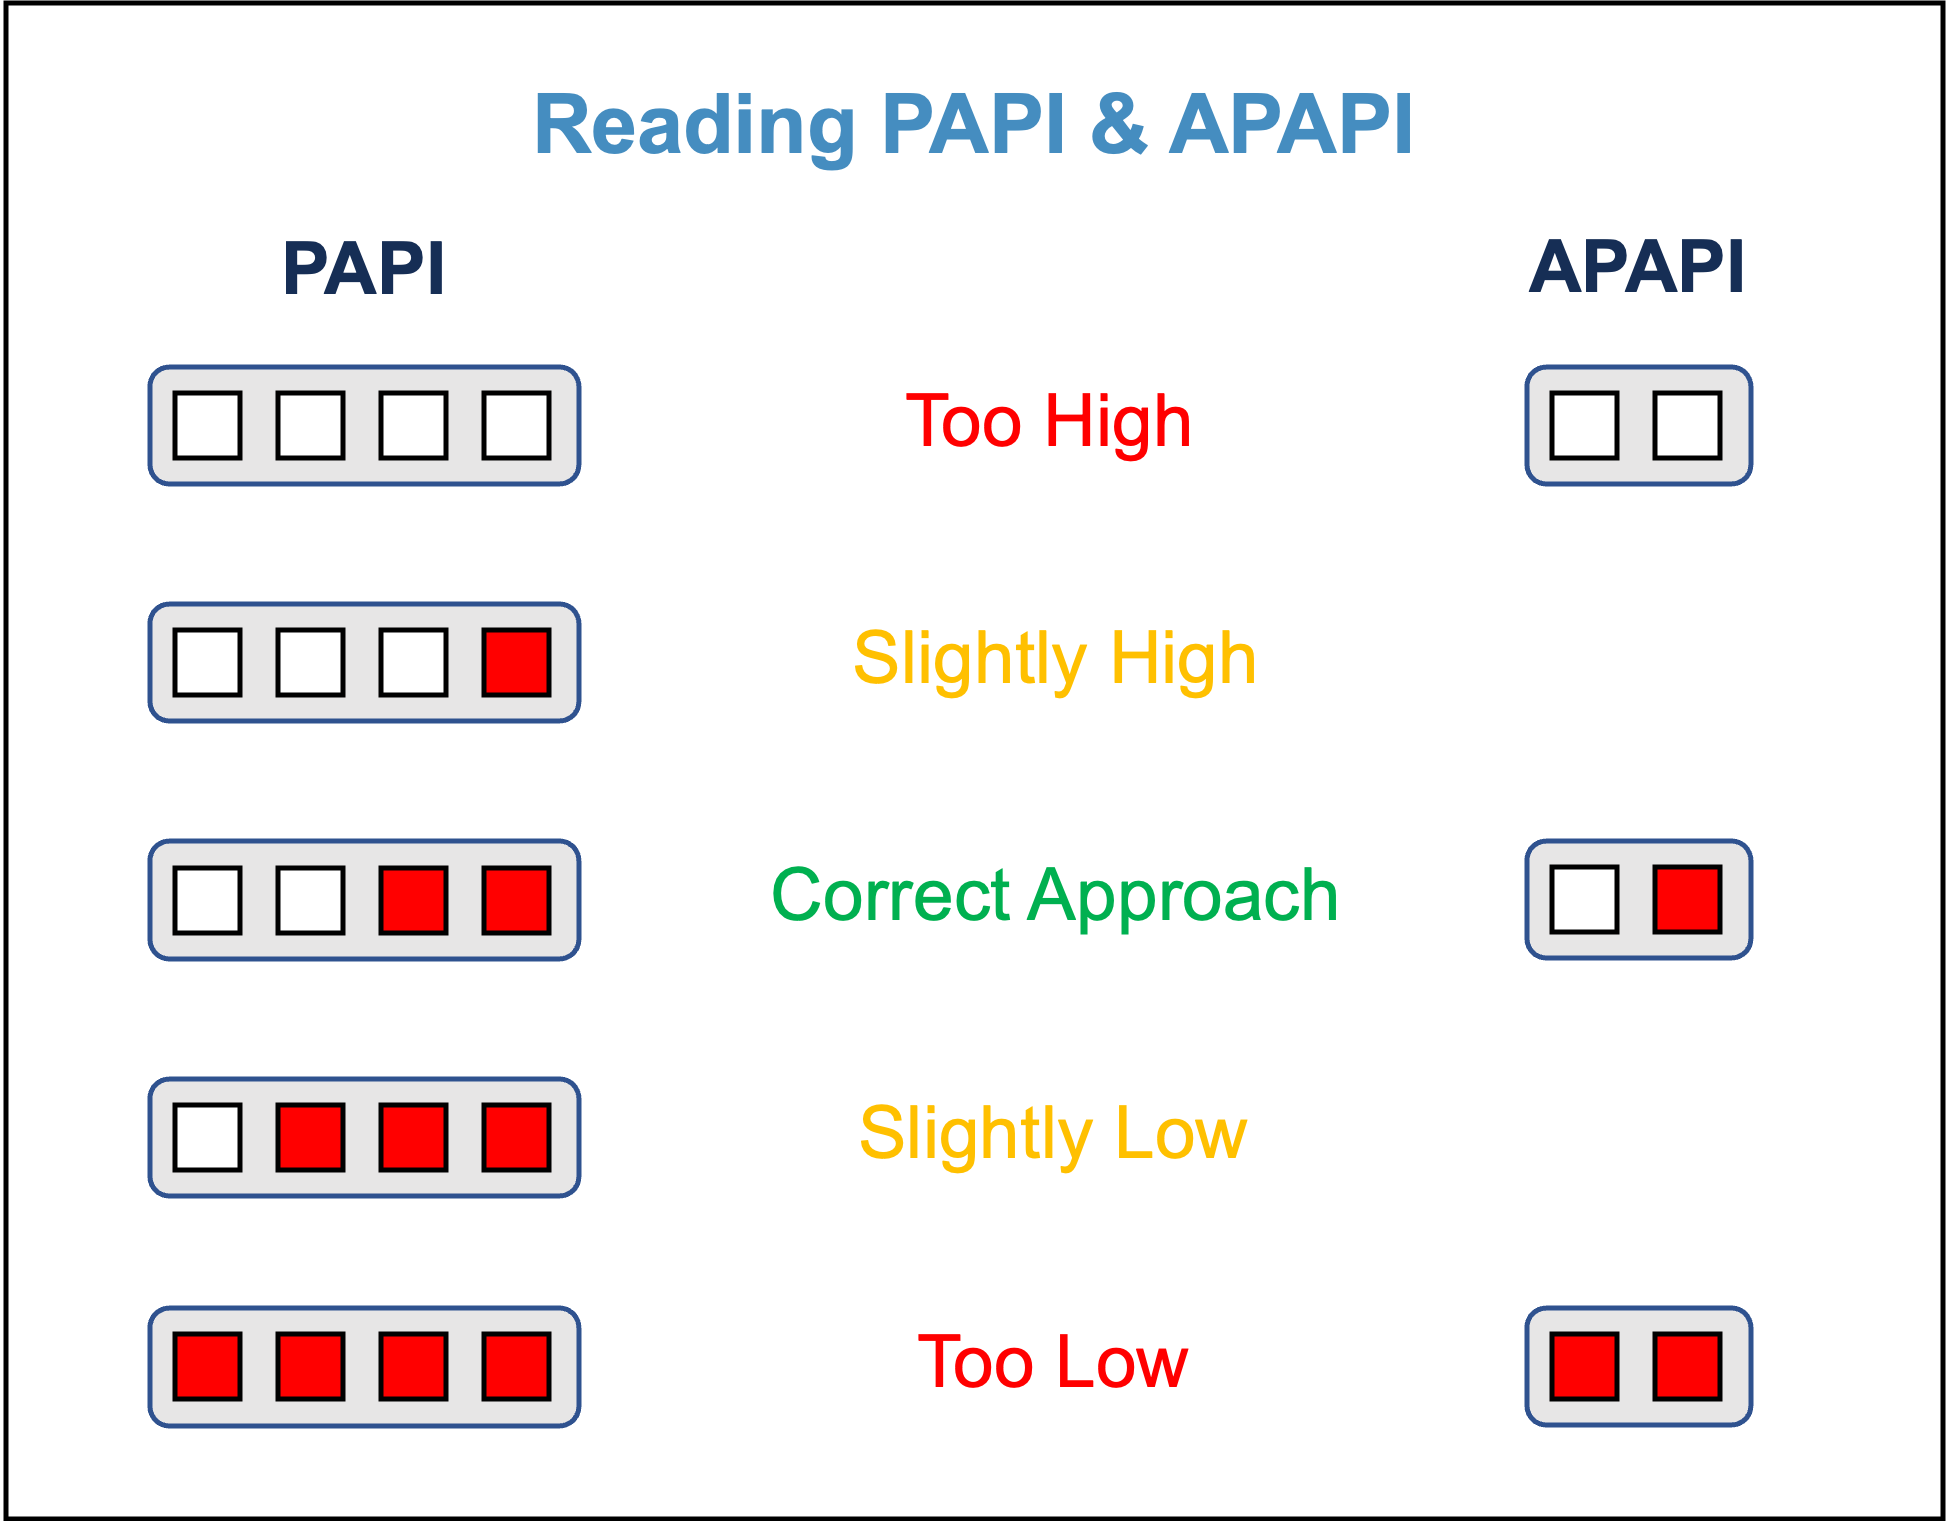 Diagram on reading PAPI and APAPI